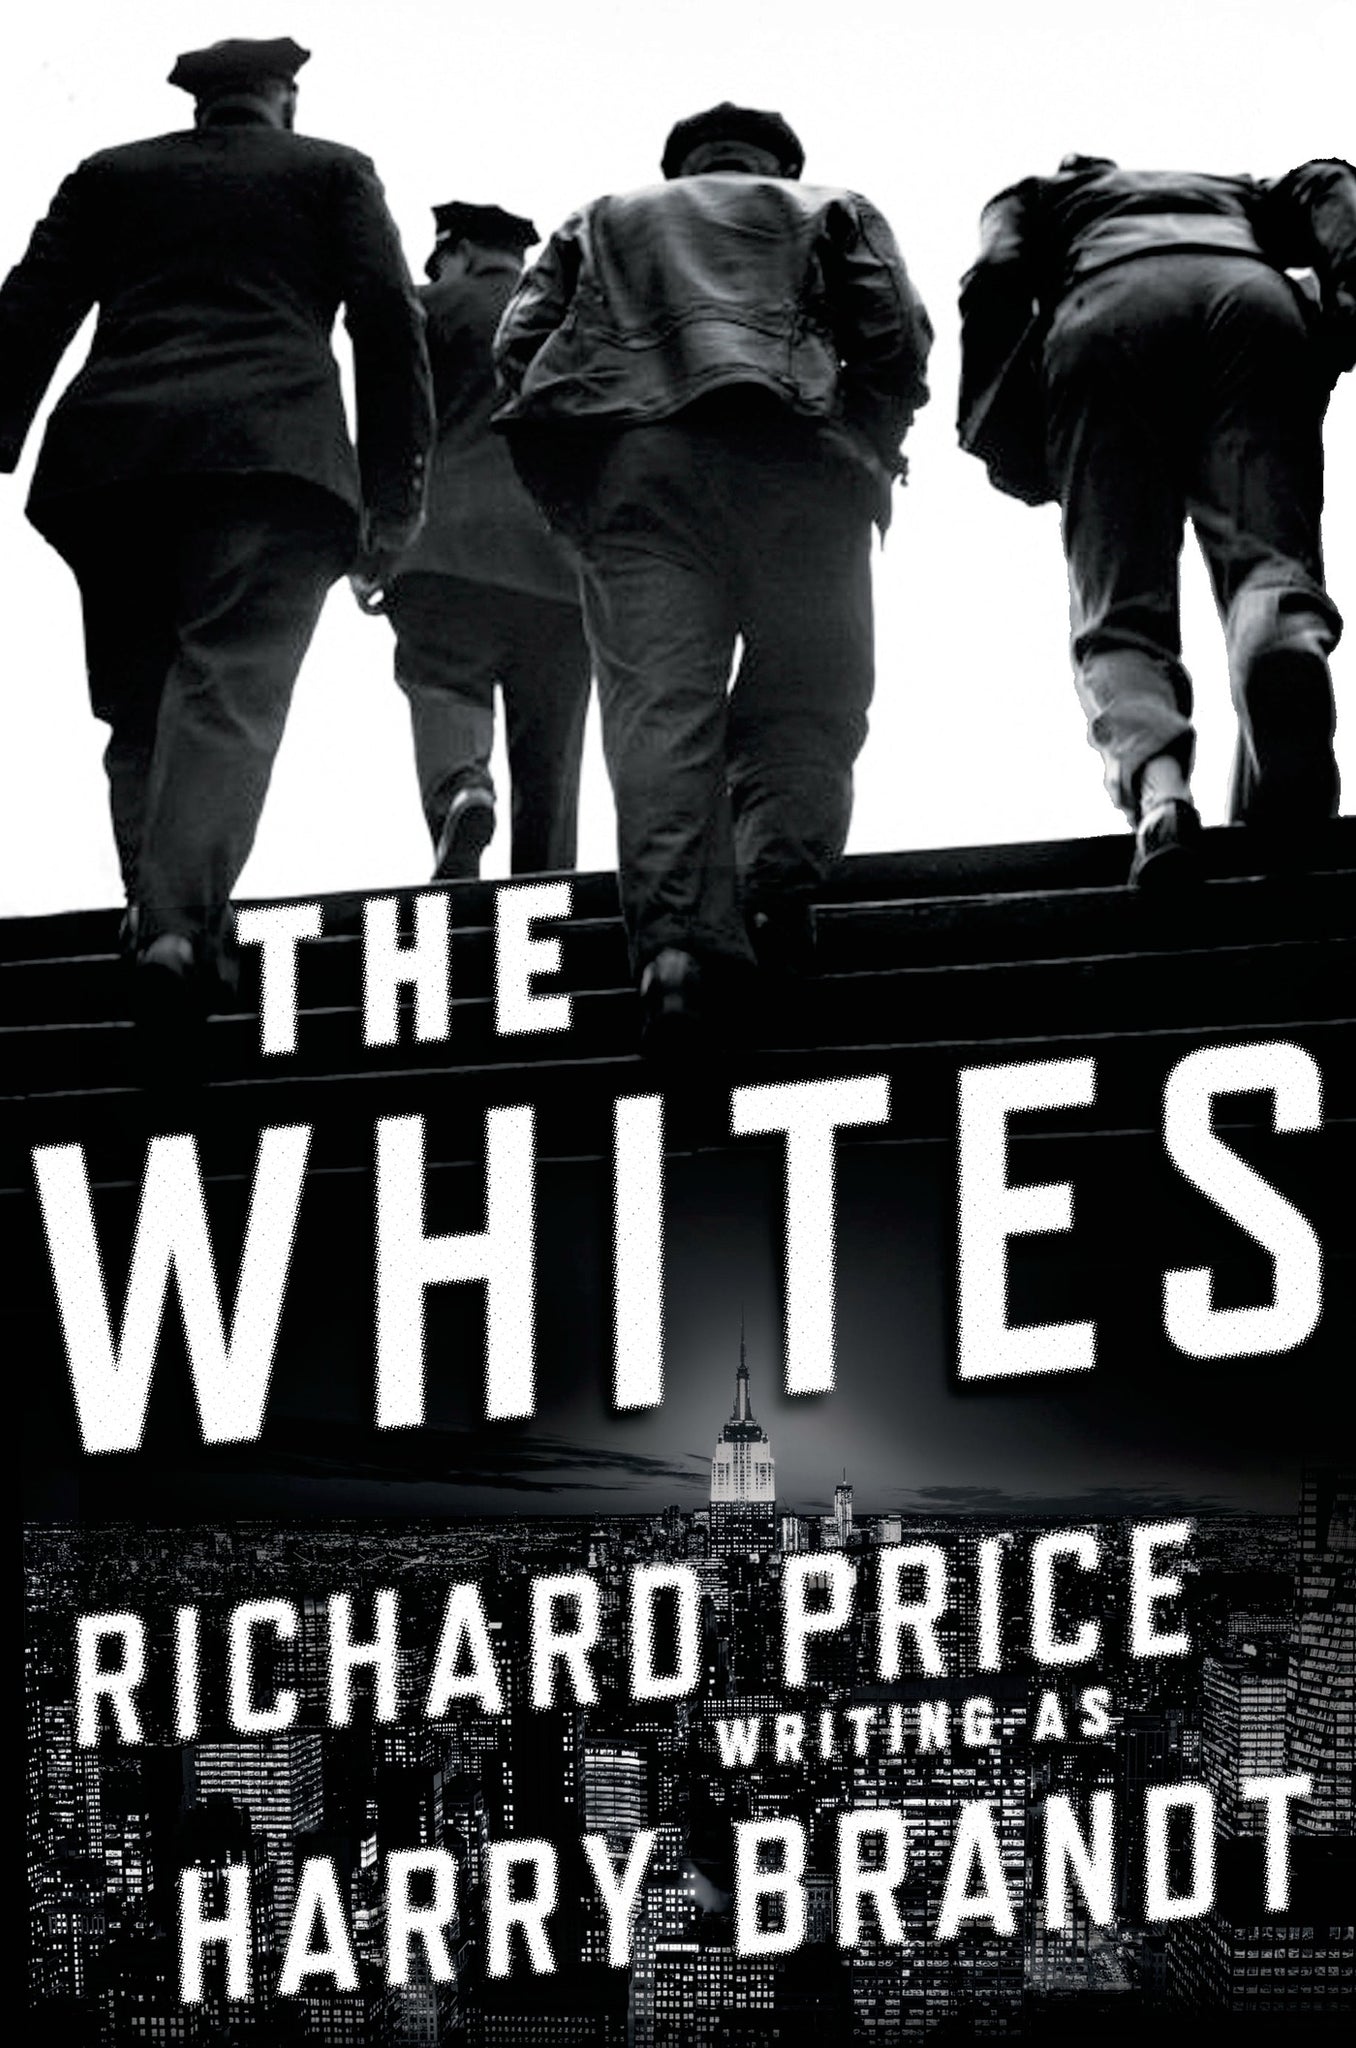 The Whites : A Novel